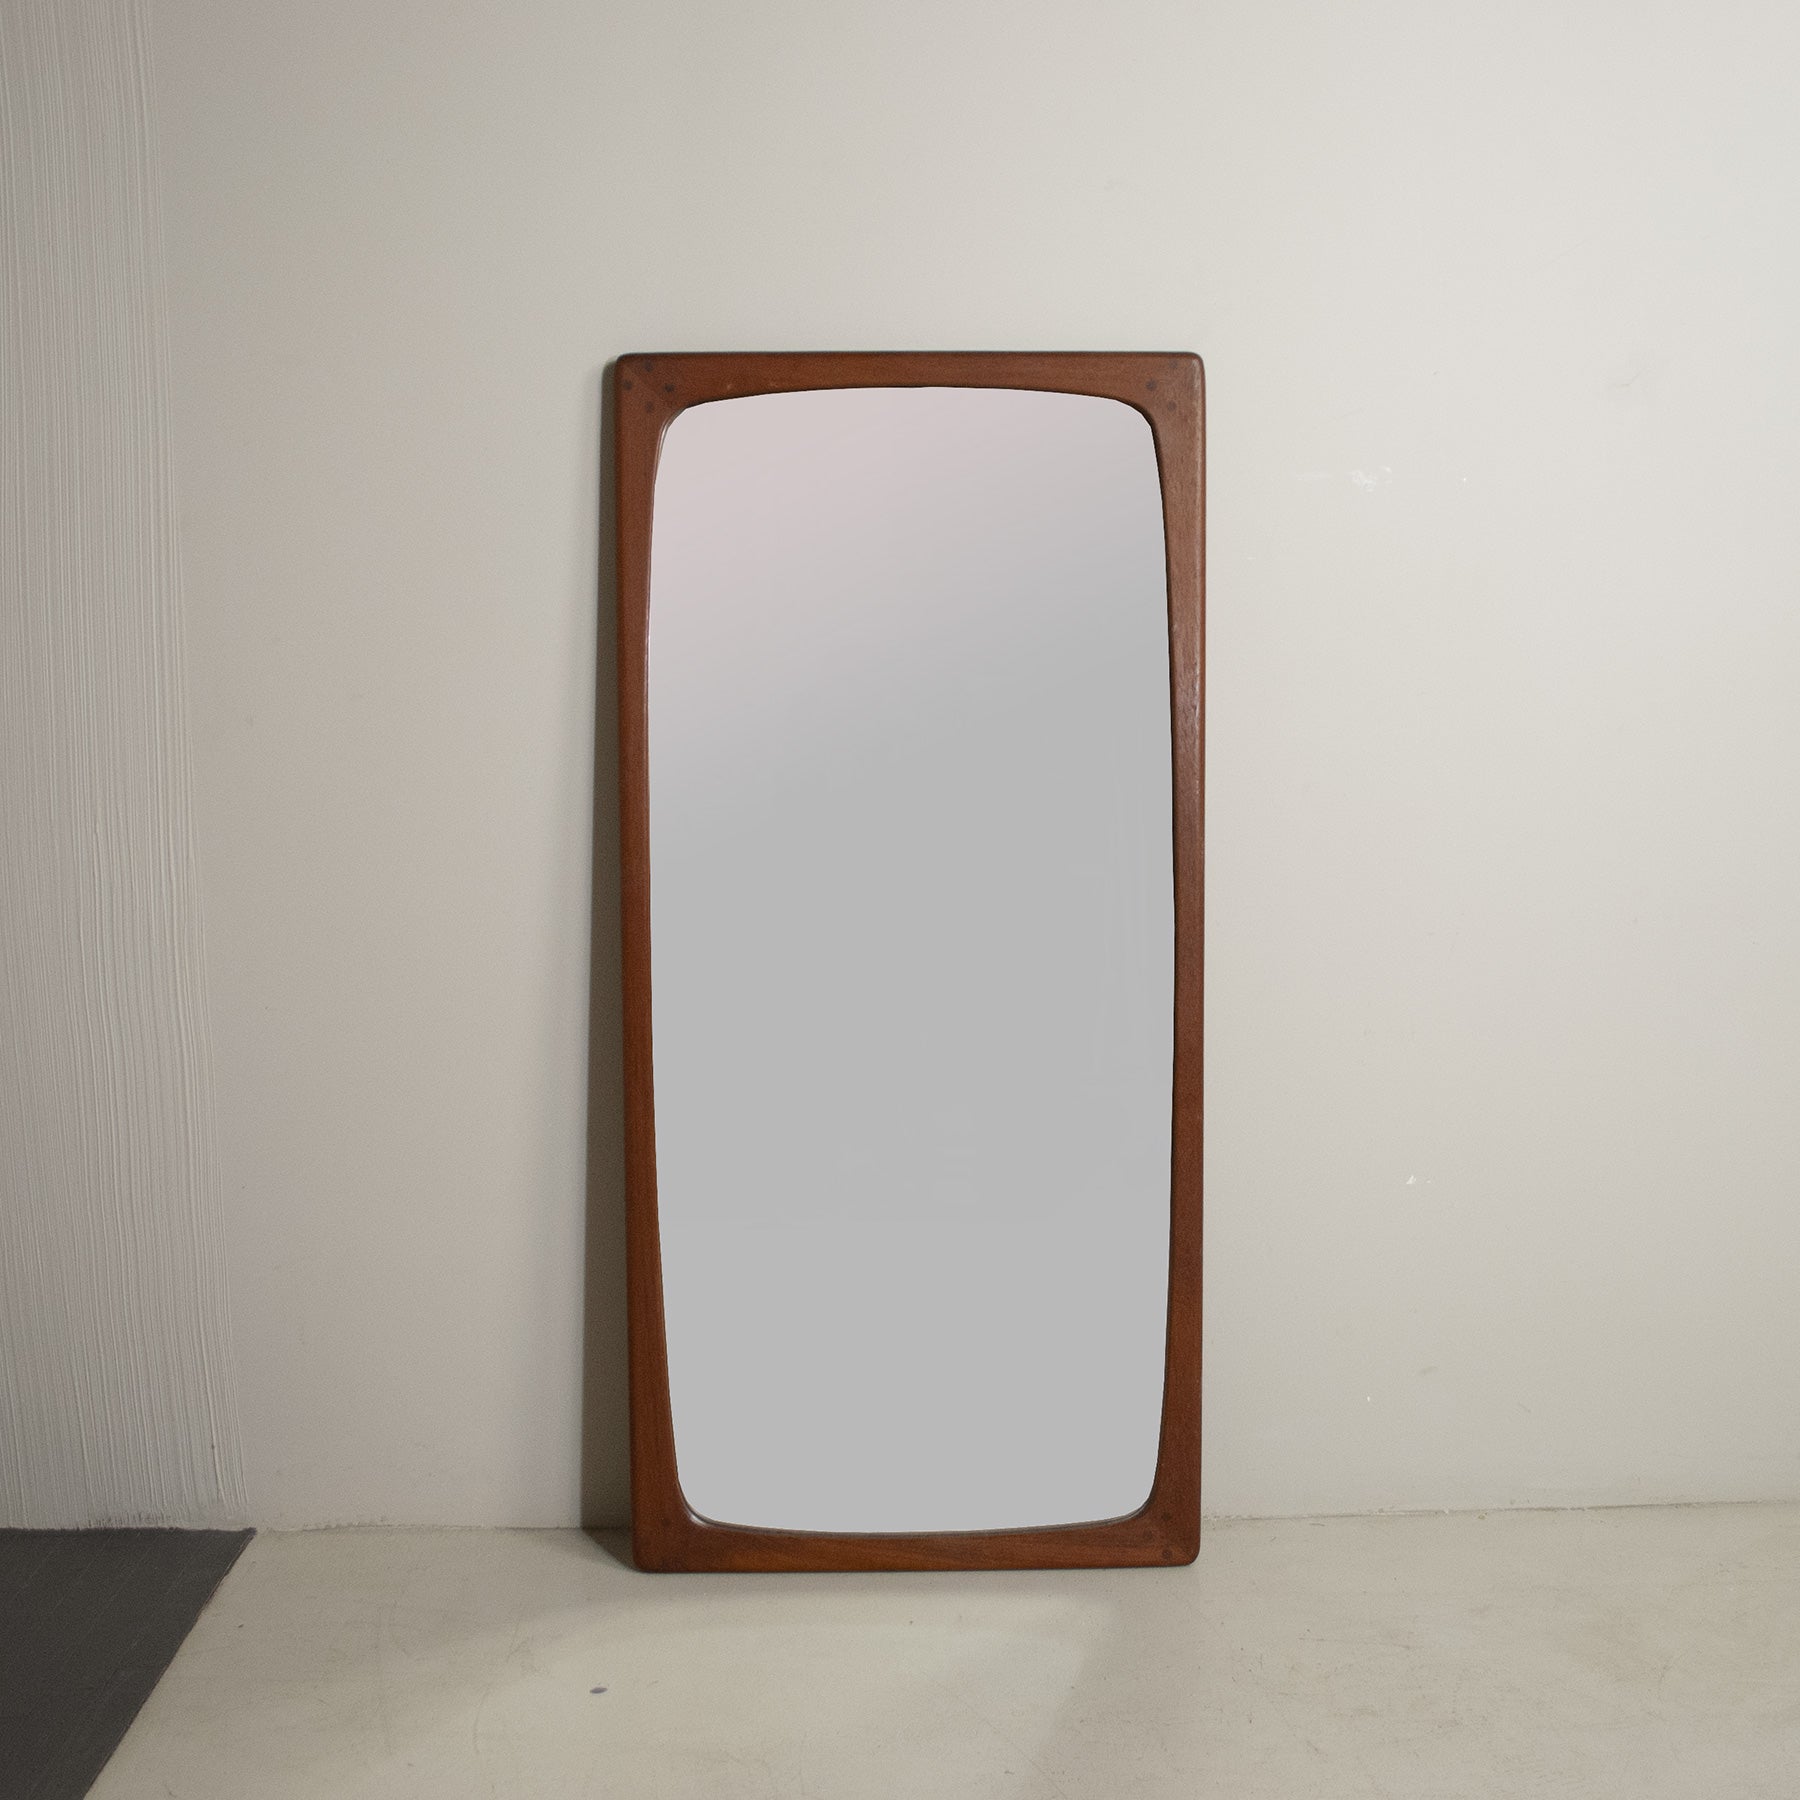 Mirror rectangular shape 60's teak wood frame, Isa Bergamo late sixties.